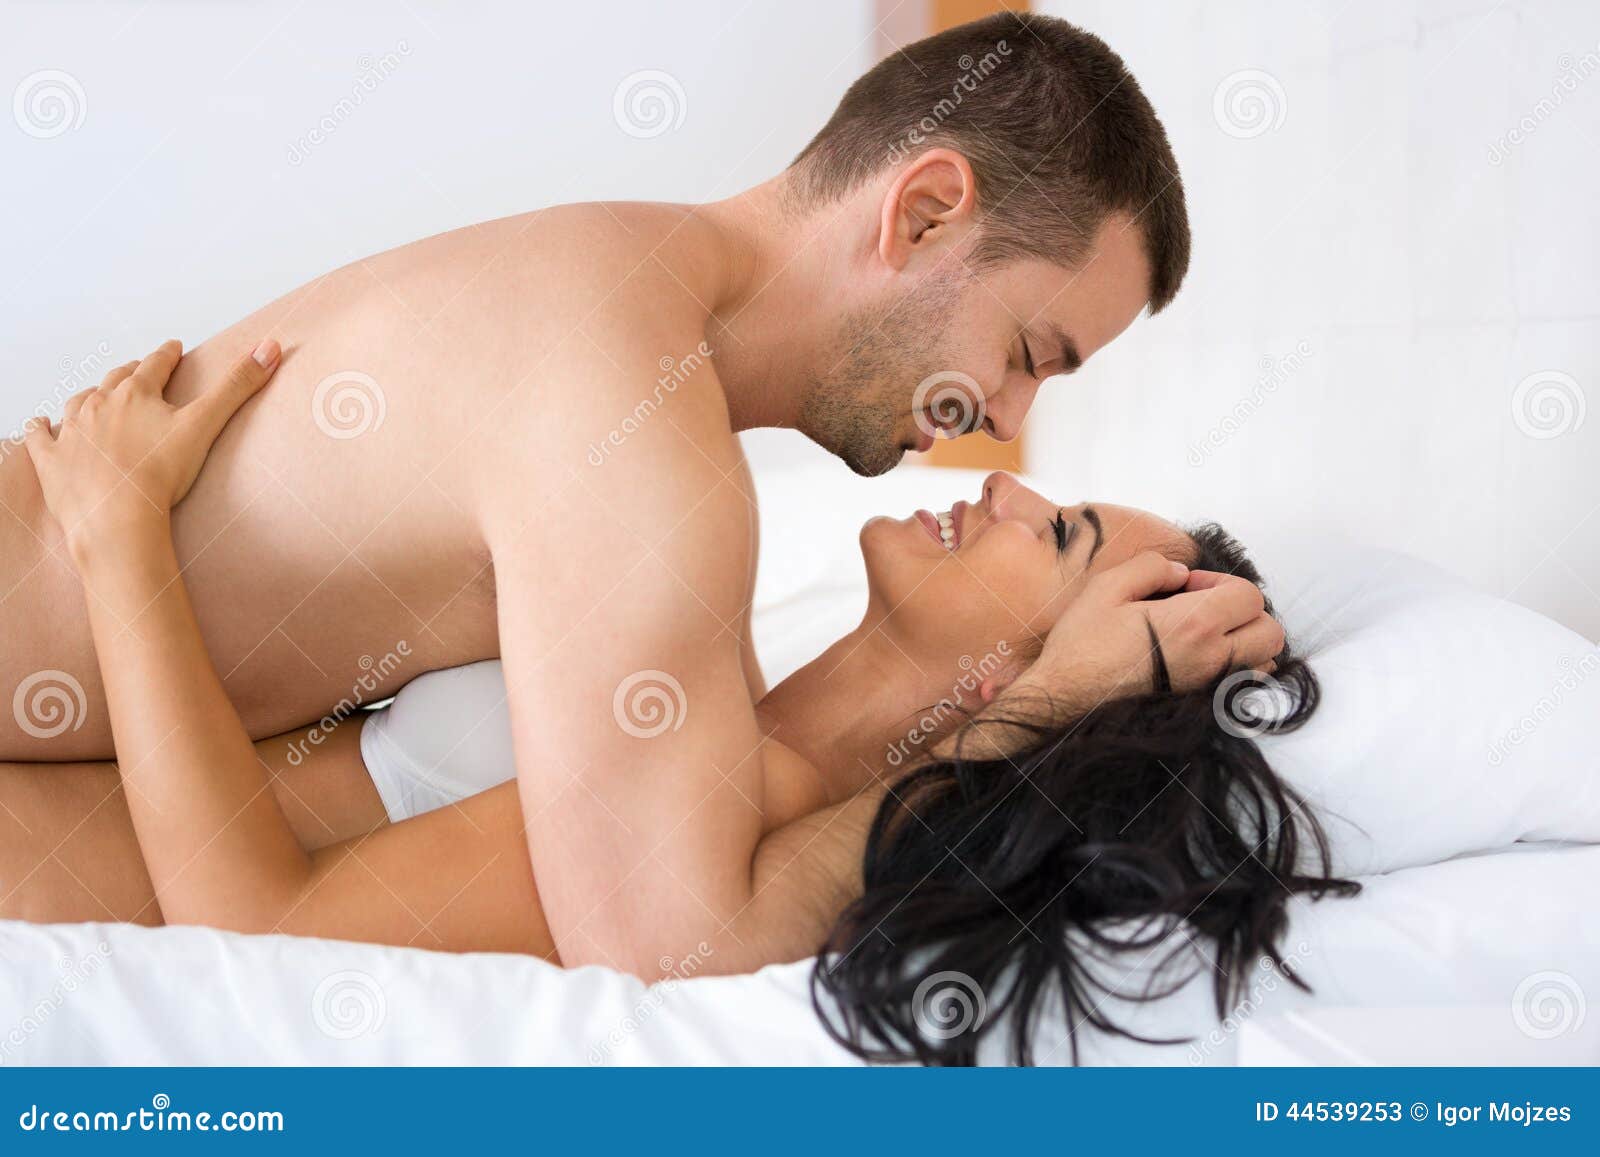 amy pimental share romantic couple having sex photos